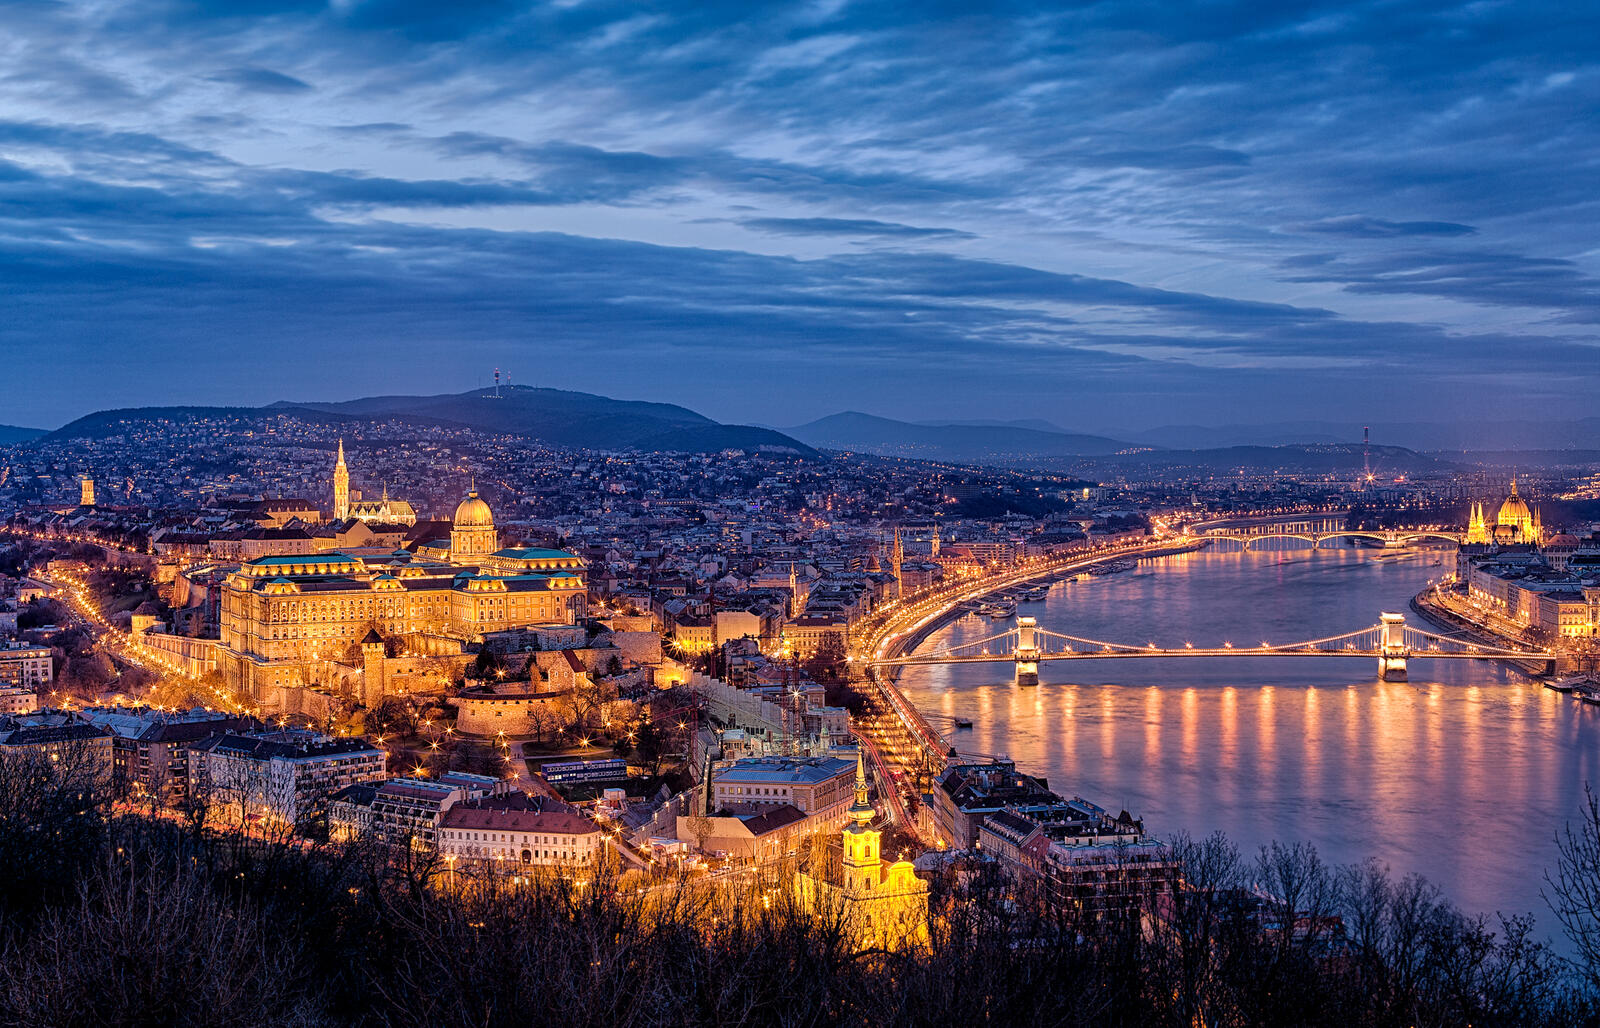 Обои Buda Castle Budapest Hungary на рабочий стол